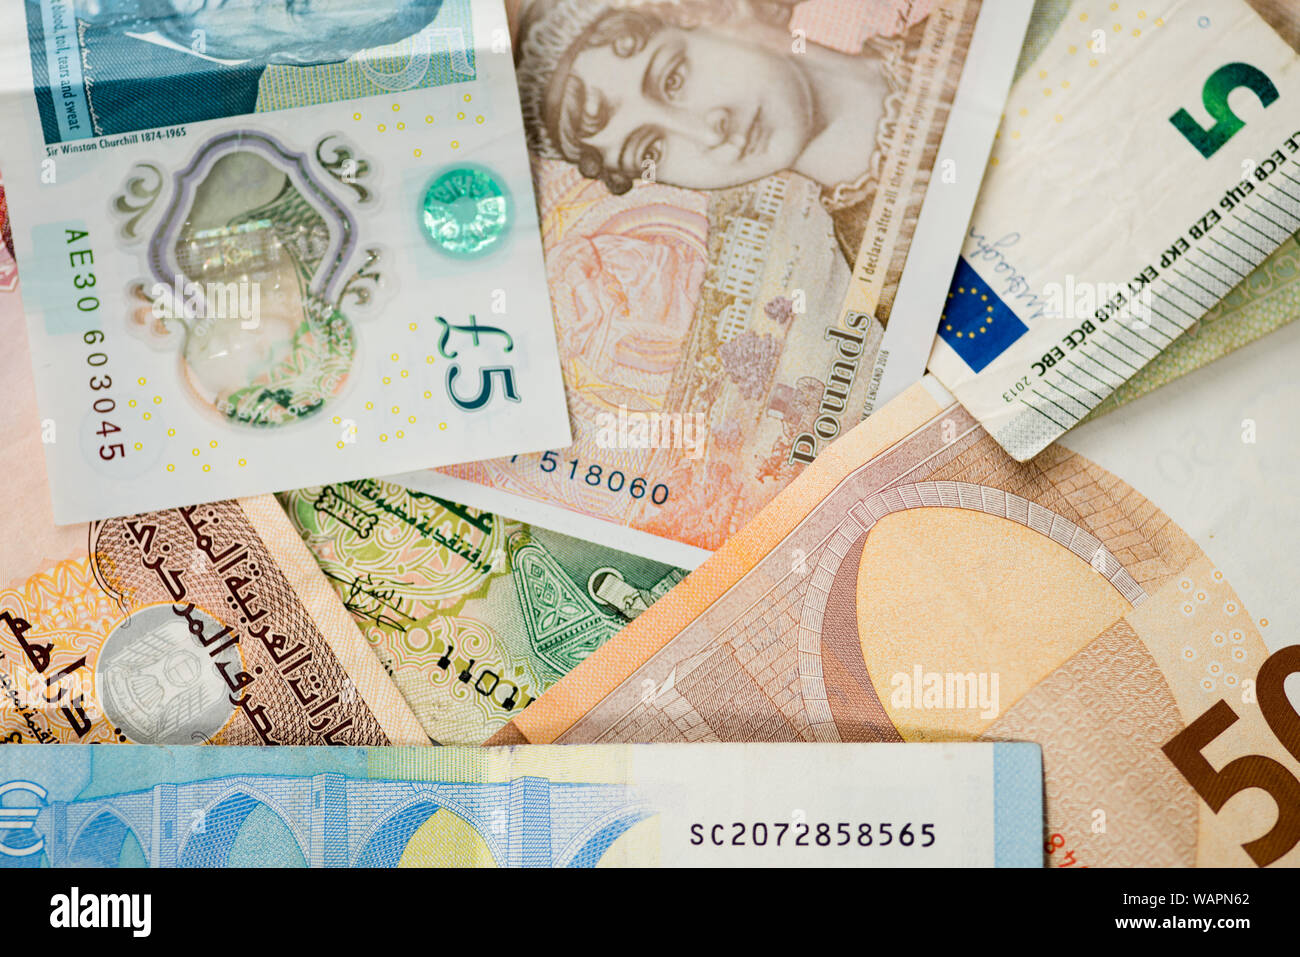 Pounds and Euros of various denominations at a closeup Stock Photo